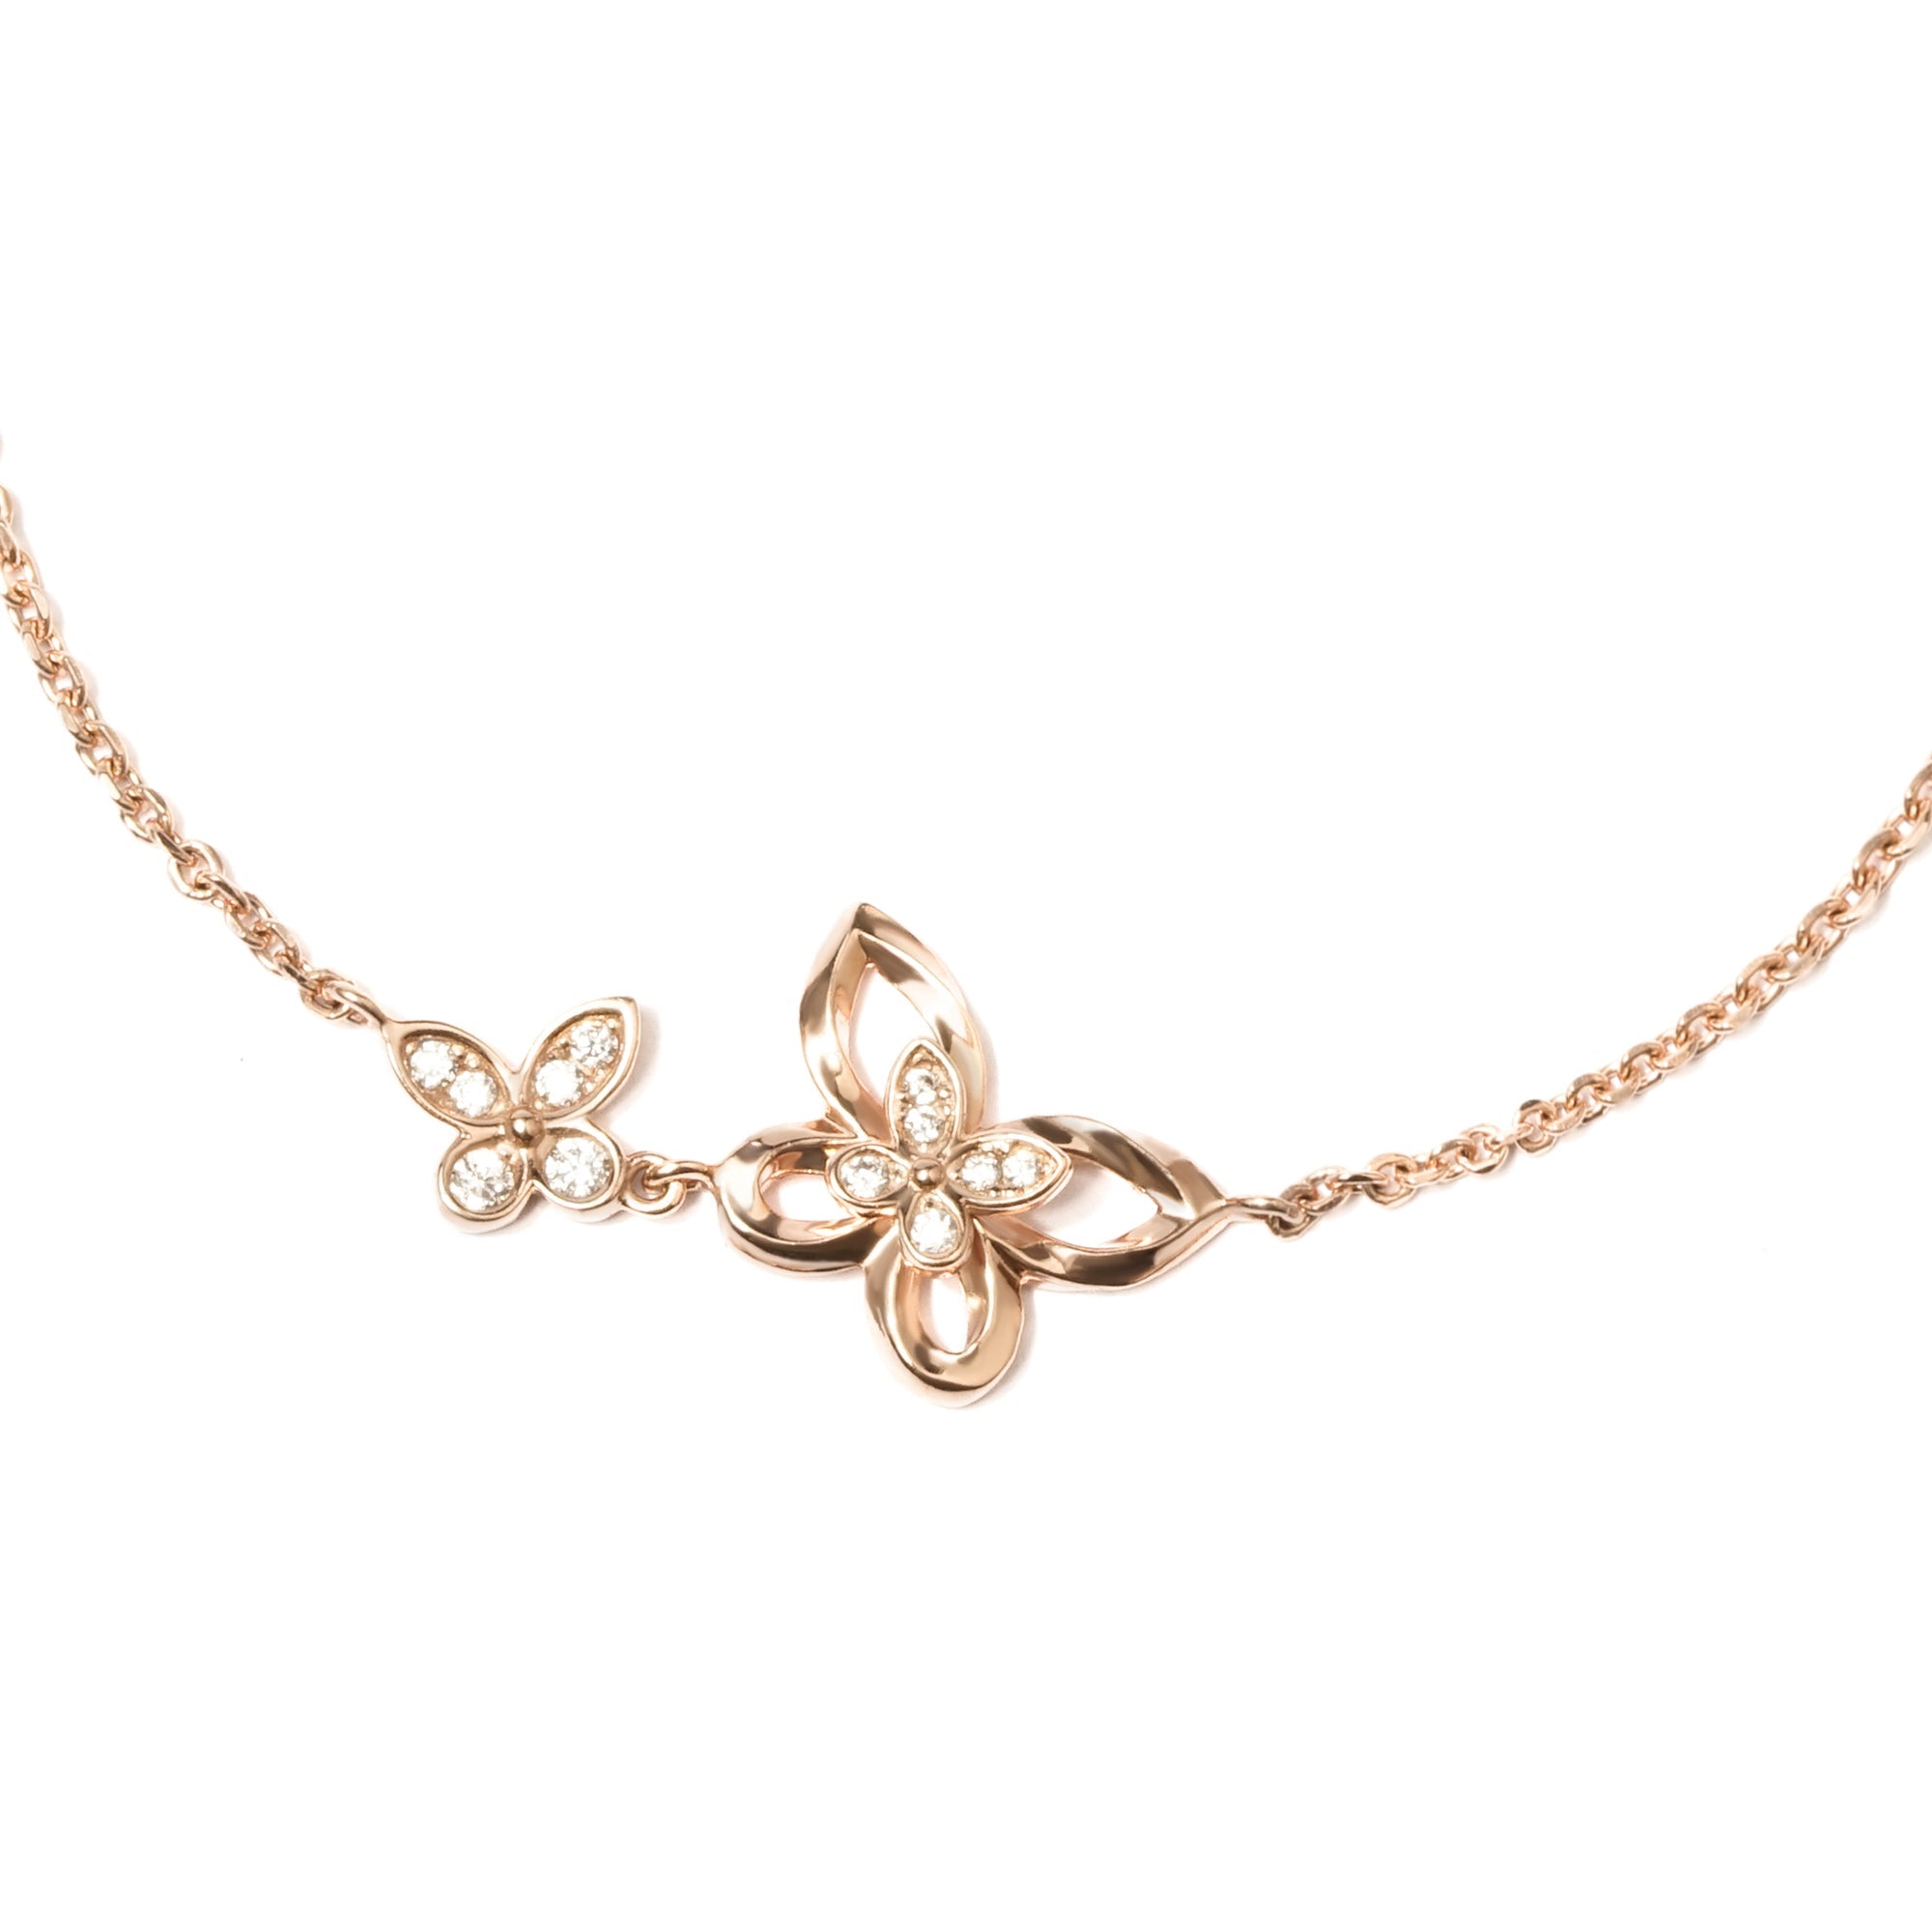 Lita Gold Bracelet - Mariposa - Juene Jewelry